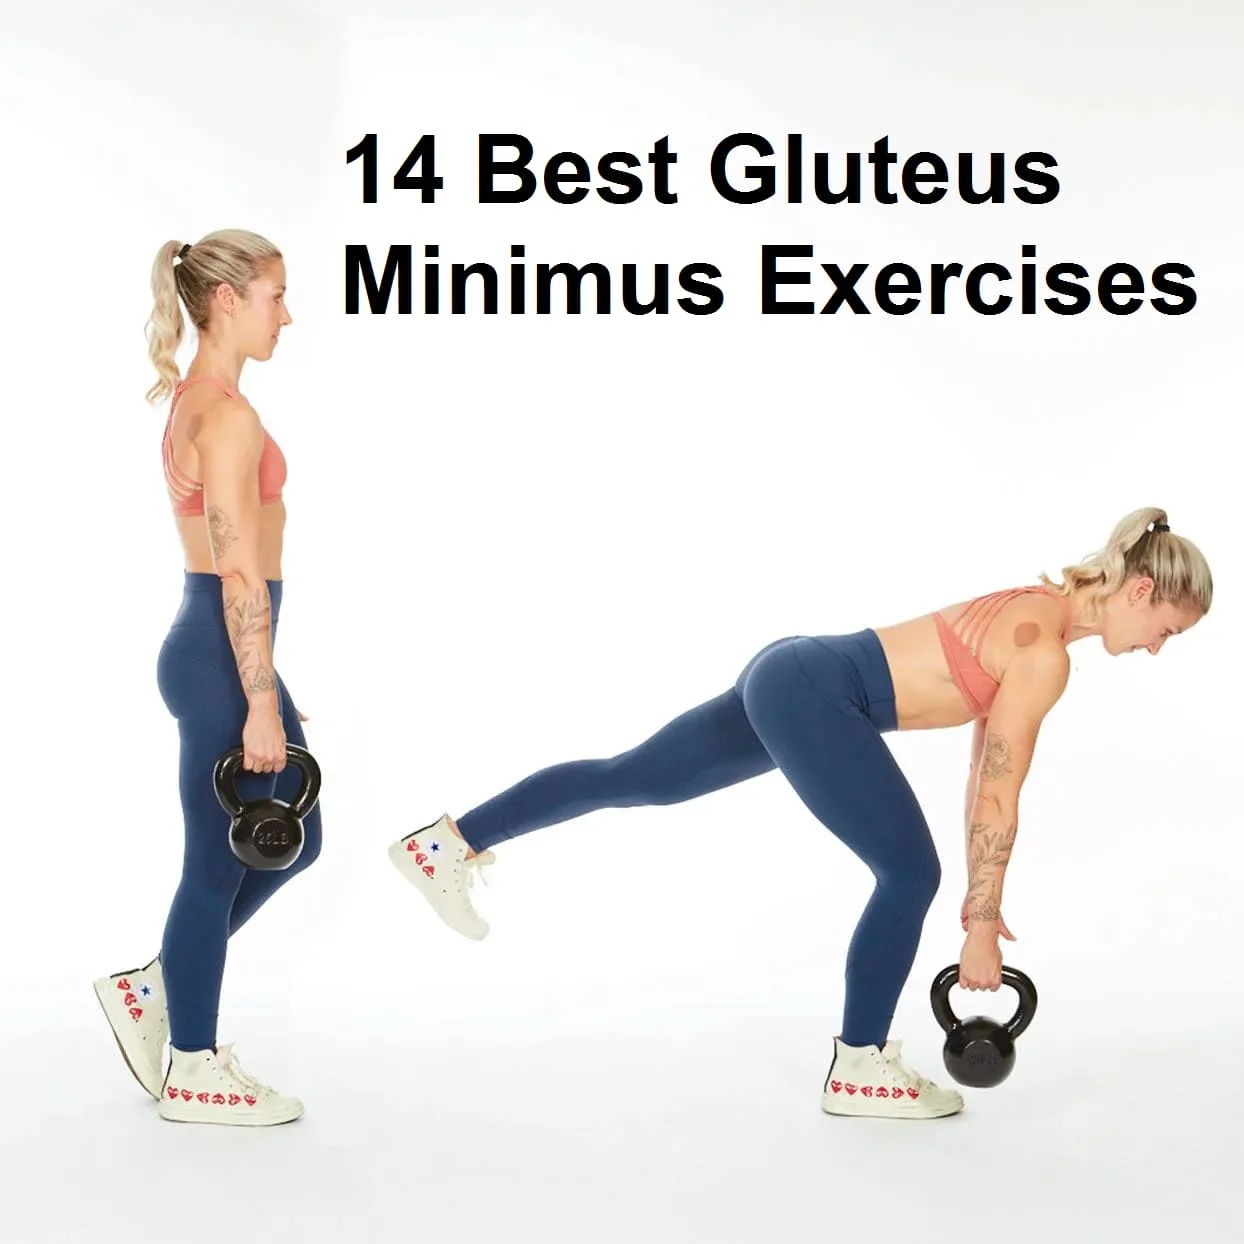 Gluteus minimus exercise